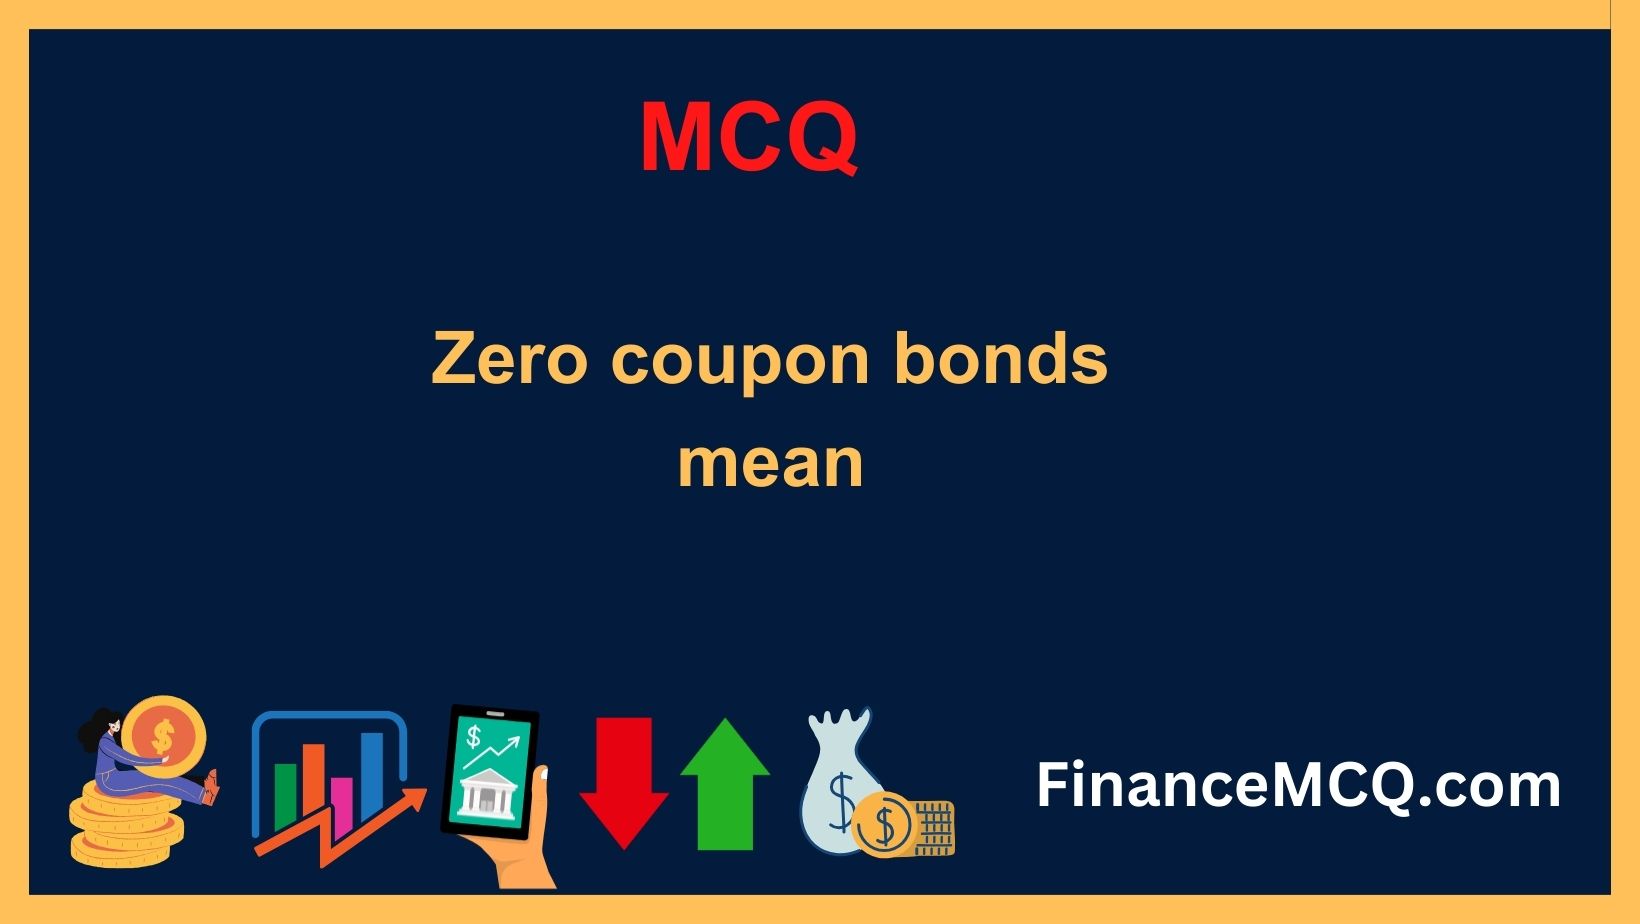 Zero coupon bonds mean